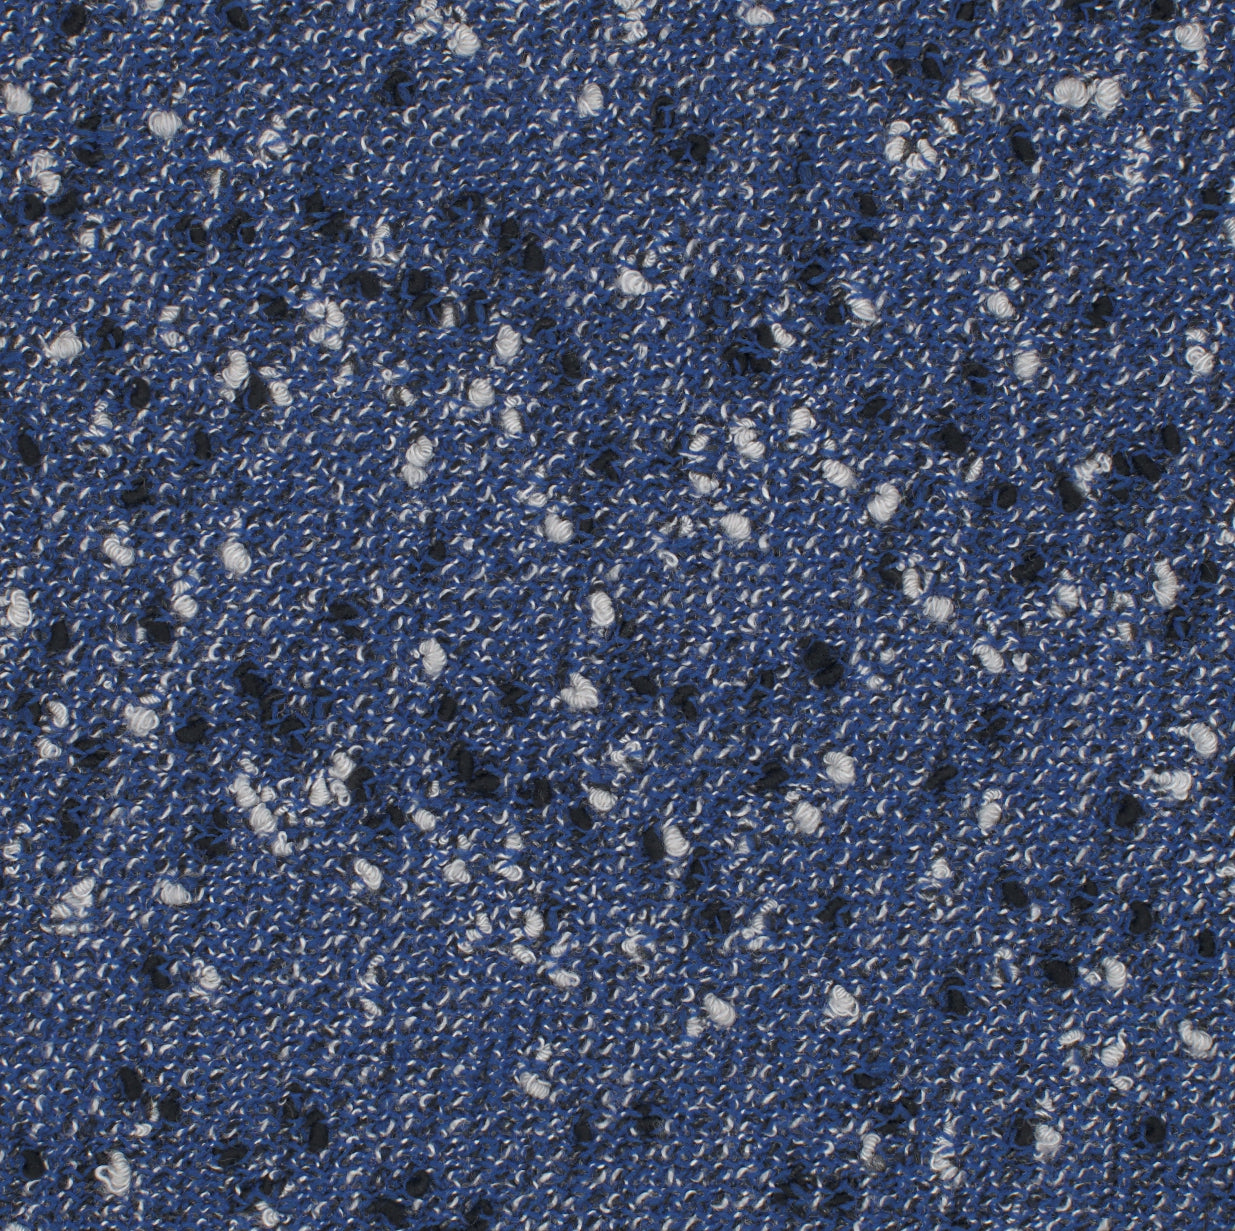 5761-04 Blue Knit Pattern Plain Dyed Blend blend blue knit pattern plain dyed polyester rayon Solid Color - knit fabric - woven fabric - fabric company - fabric wholesale - fabric b2b - fabric factory - high quality fabric - hong kong fabric - fabric hk - acetate fabric - cotton fabric - linen fabric - metallic fabric - nylon fabric - polyester fabric - spandex fabric - chun wing hing - cwh hk - fabric worldwide ship - 針織布 - 梳織布 - 布料公司- 布料批發 - 香港布料 - 秦榮興